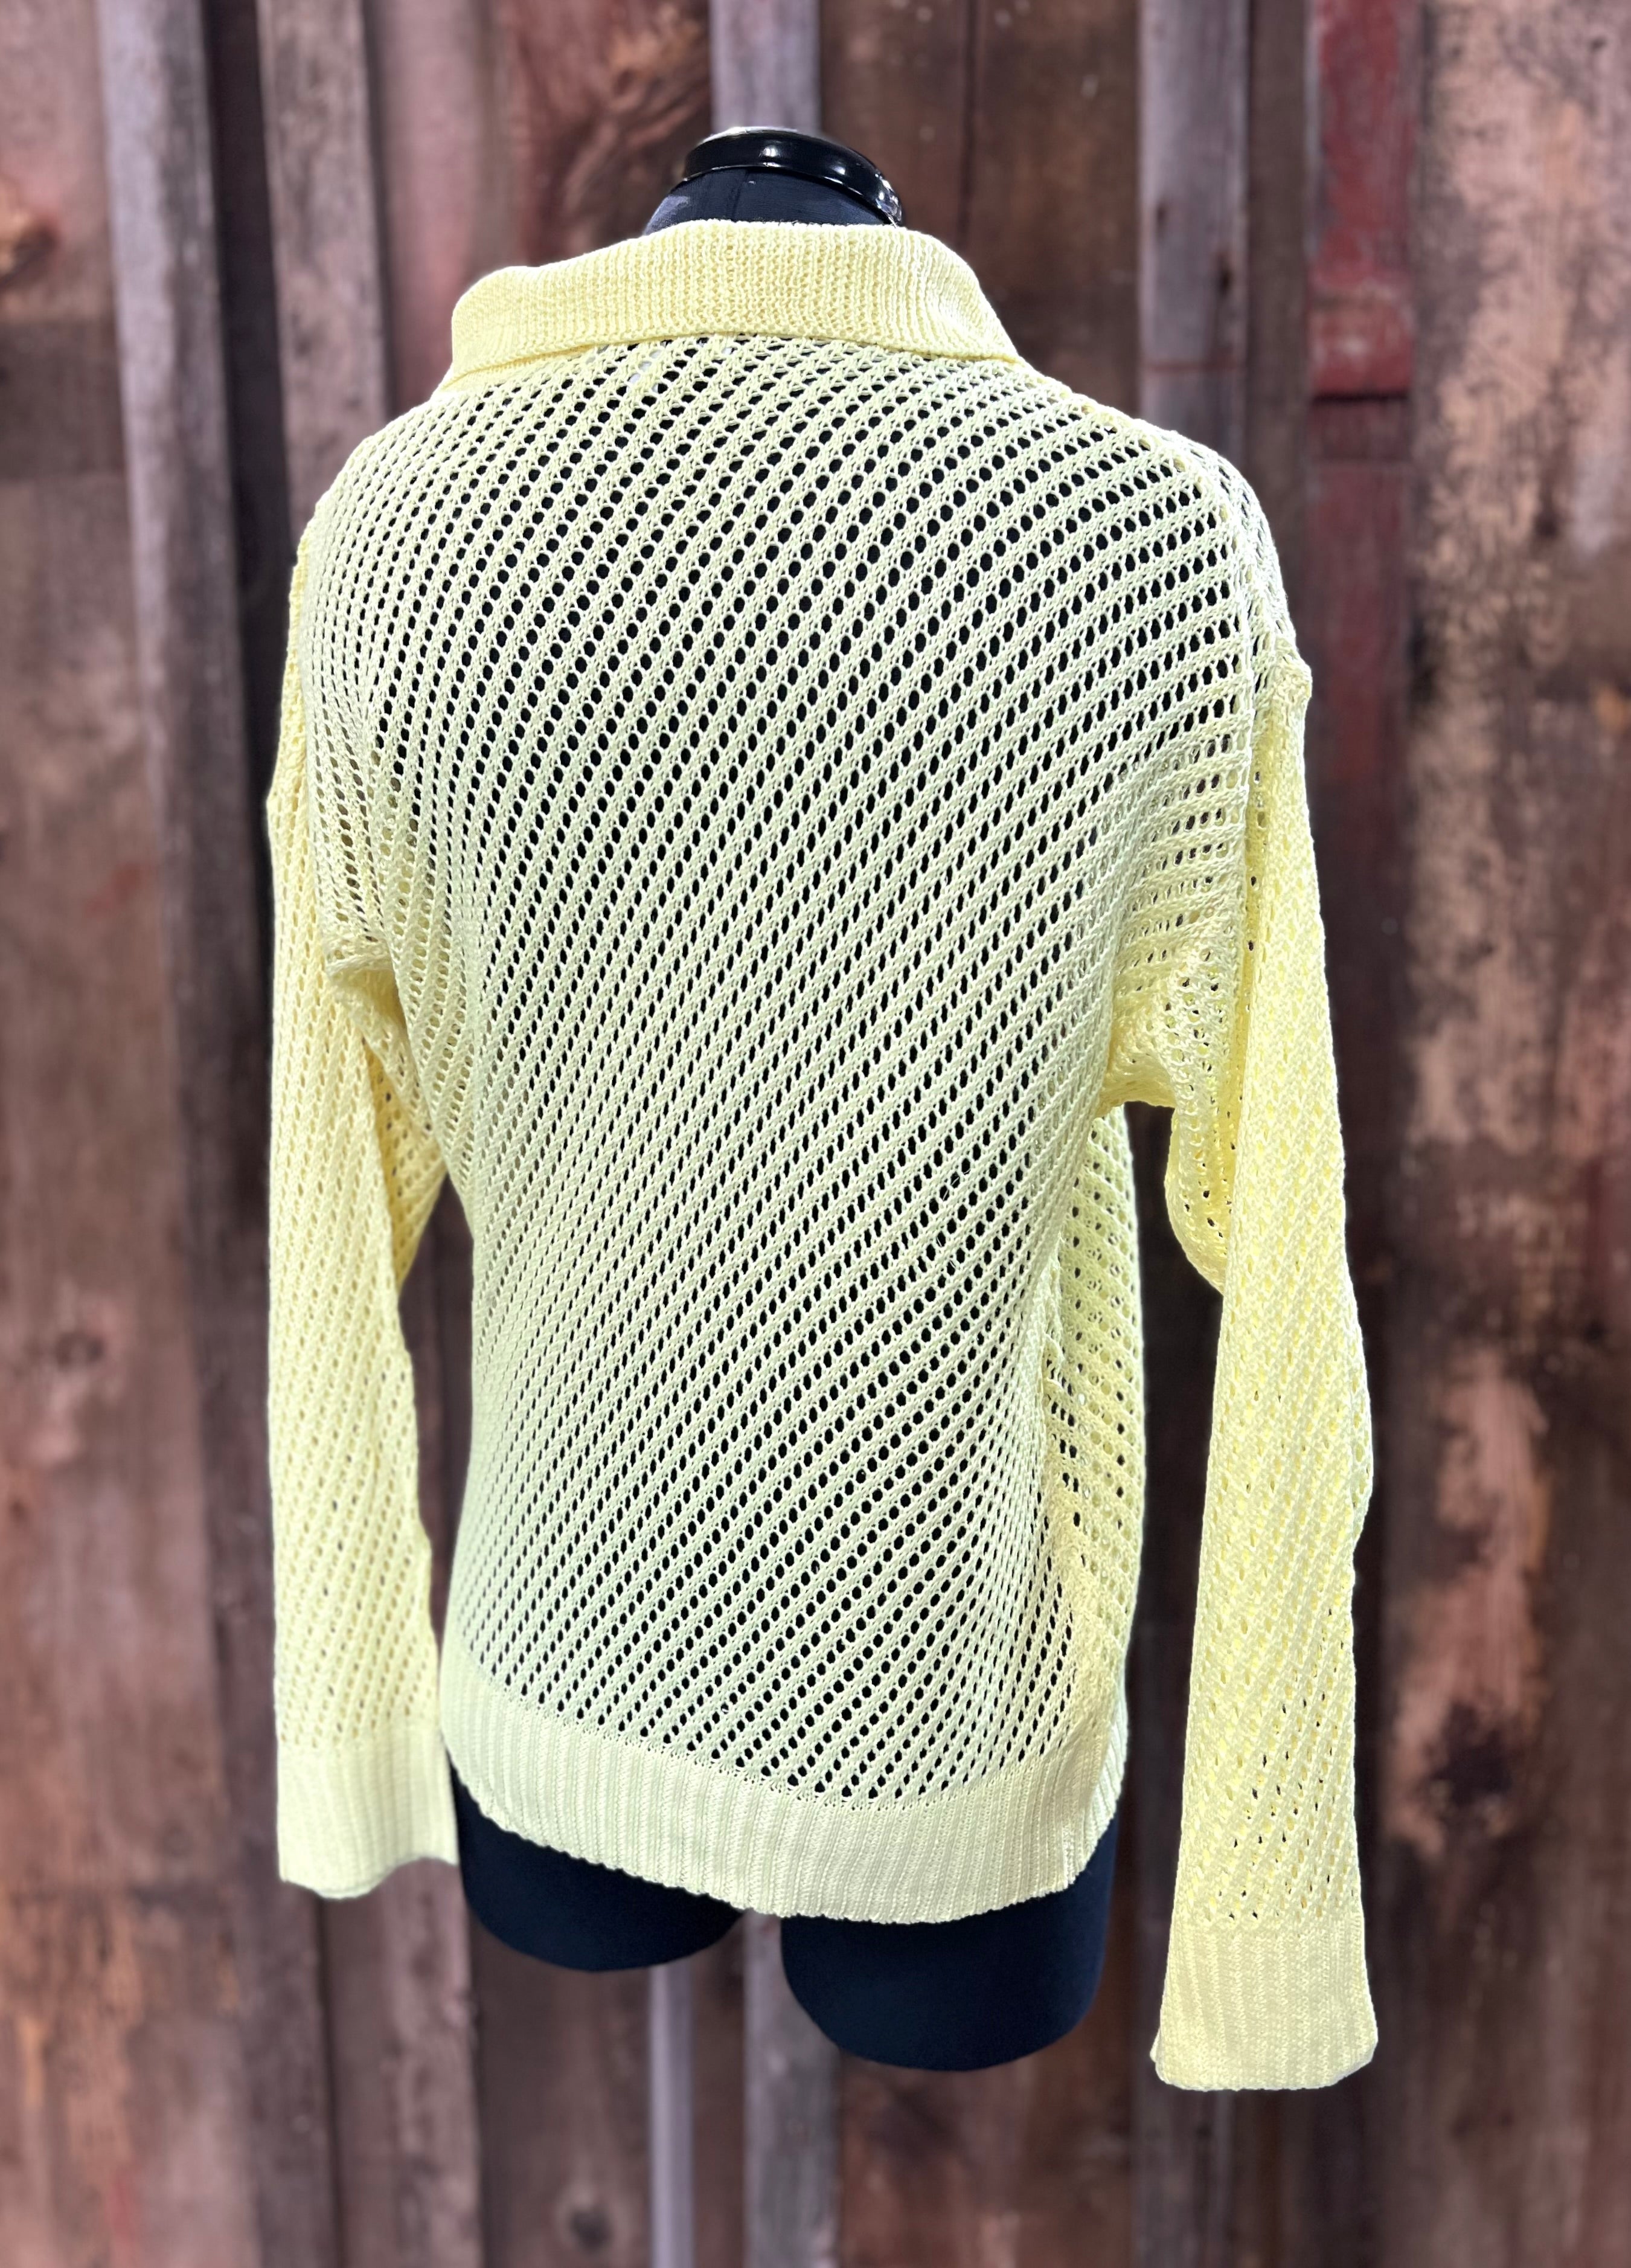 Neon Yellow Knit Sweater